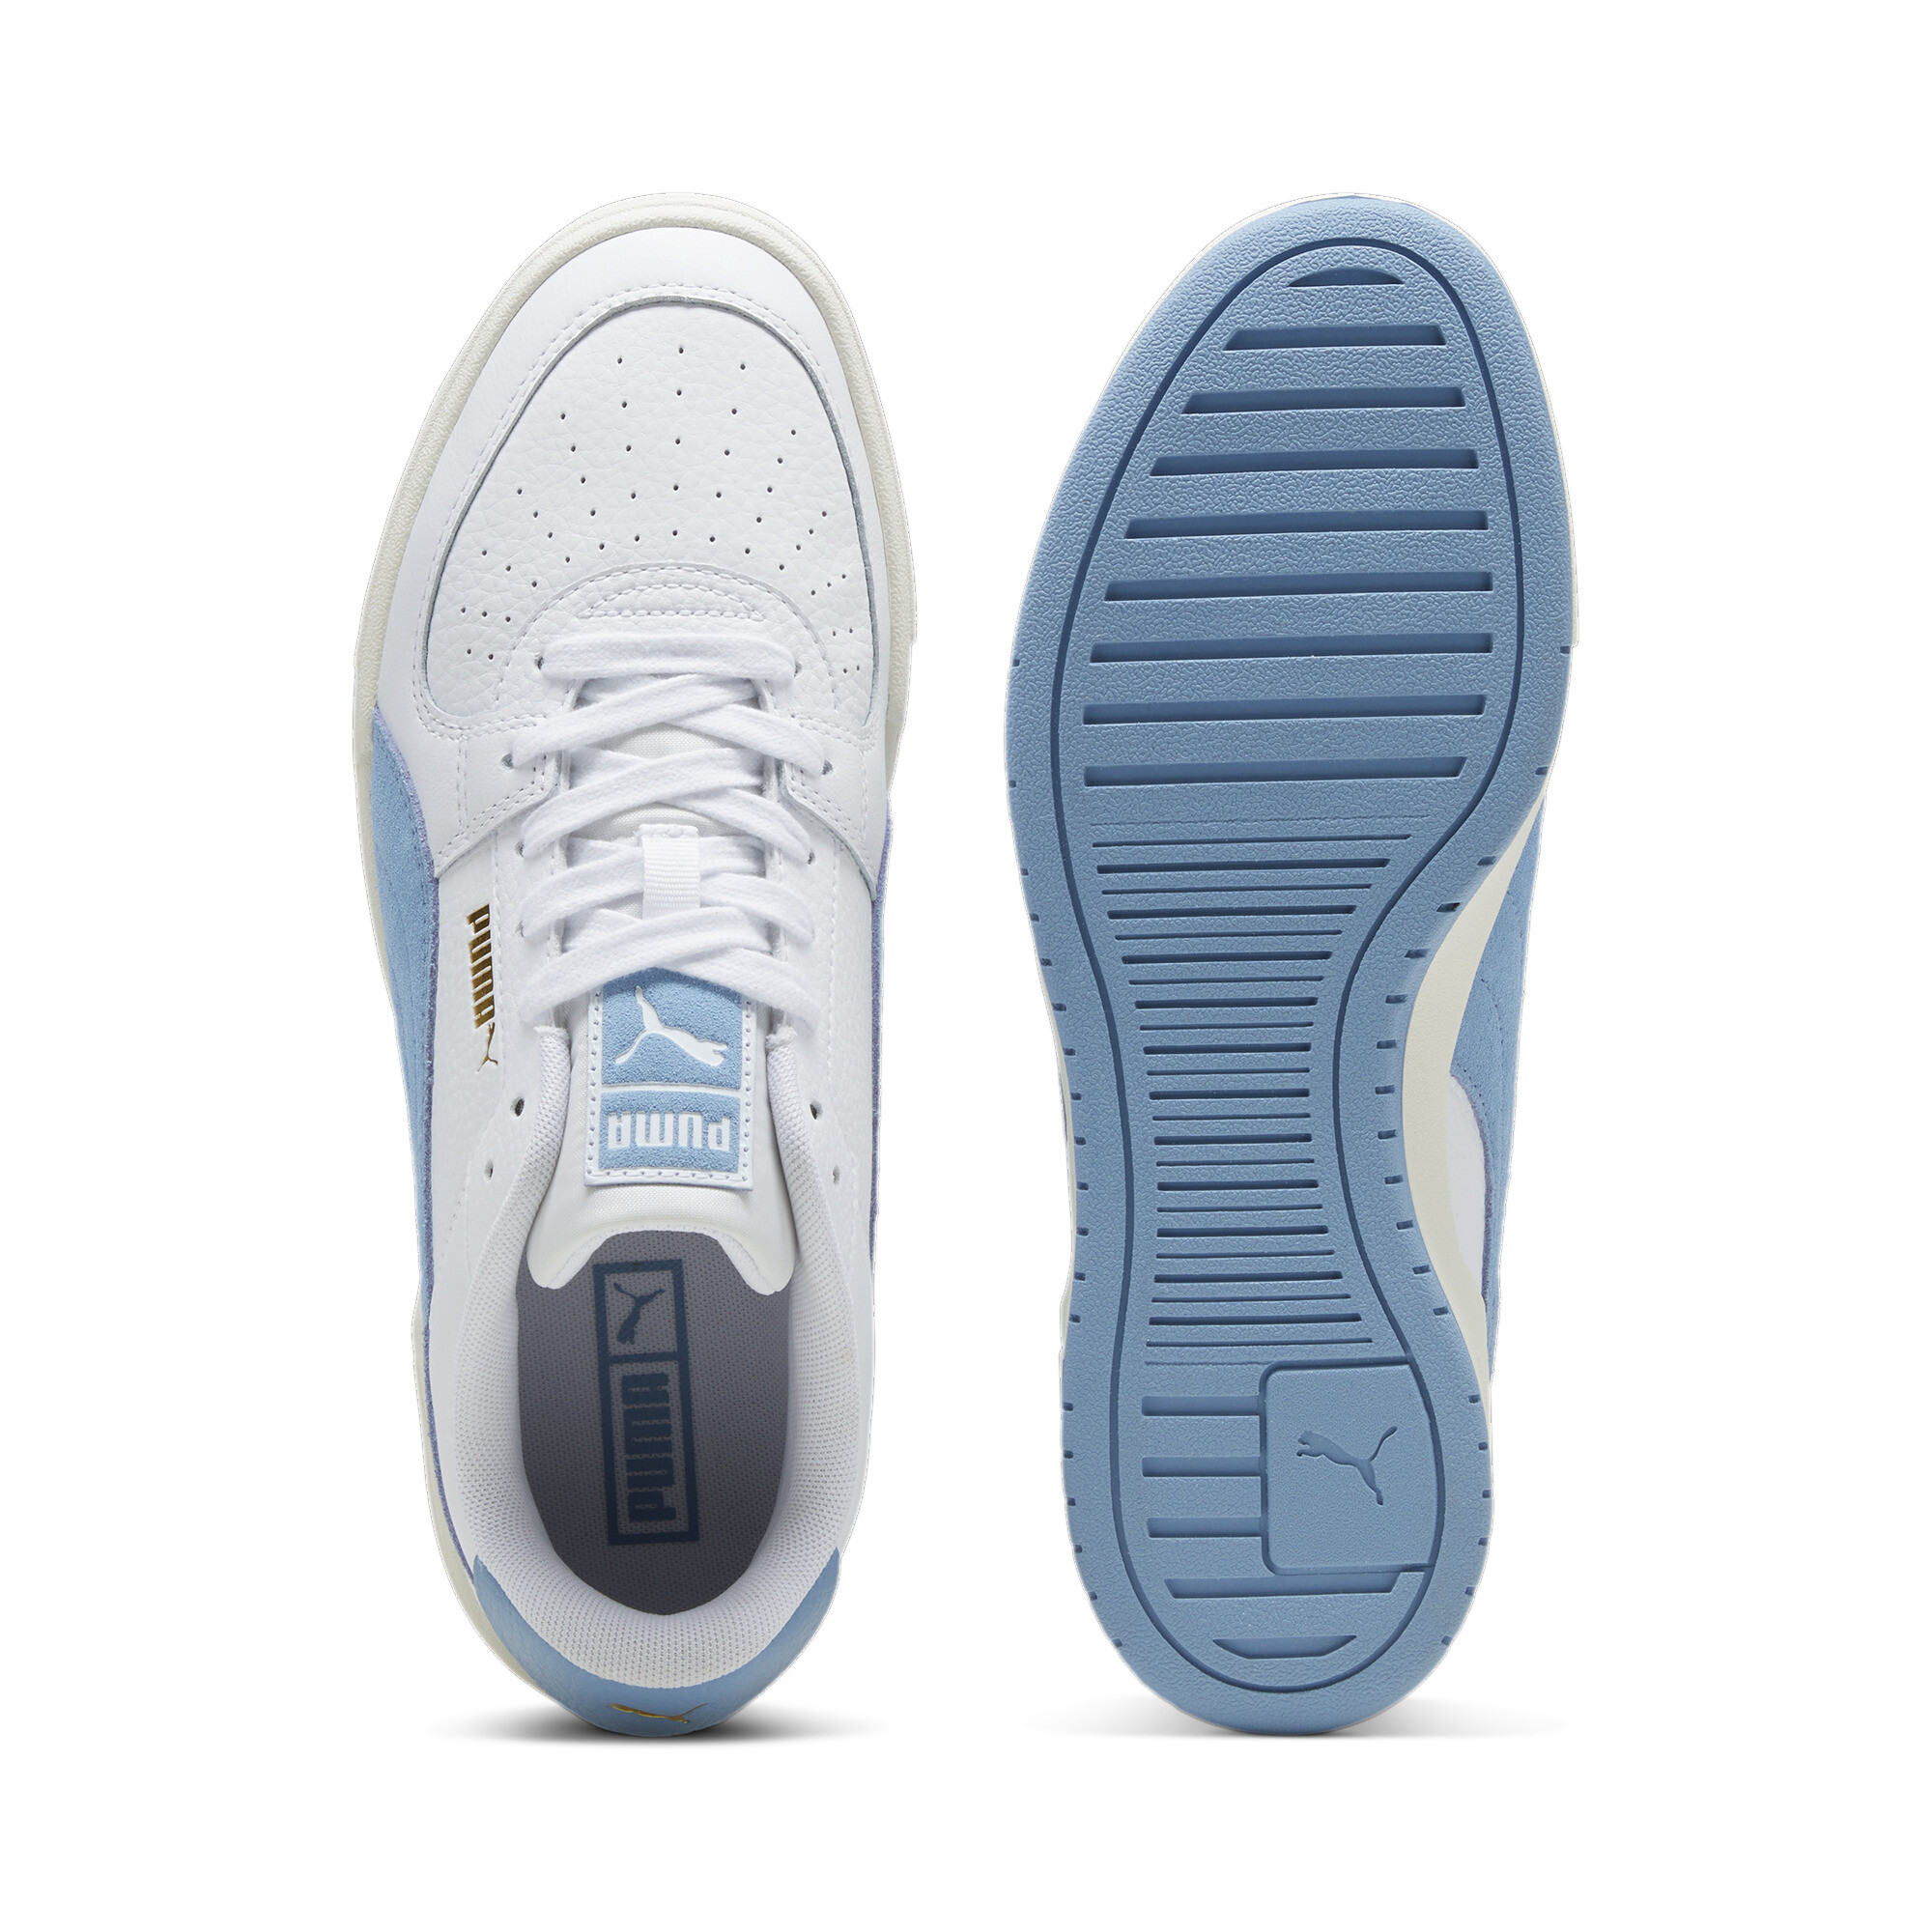 Men's PUMA CA Pro Suede FS Sneakers In White, Size EU 41